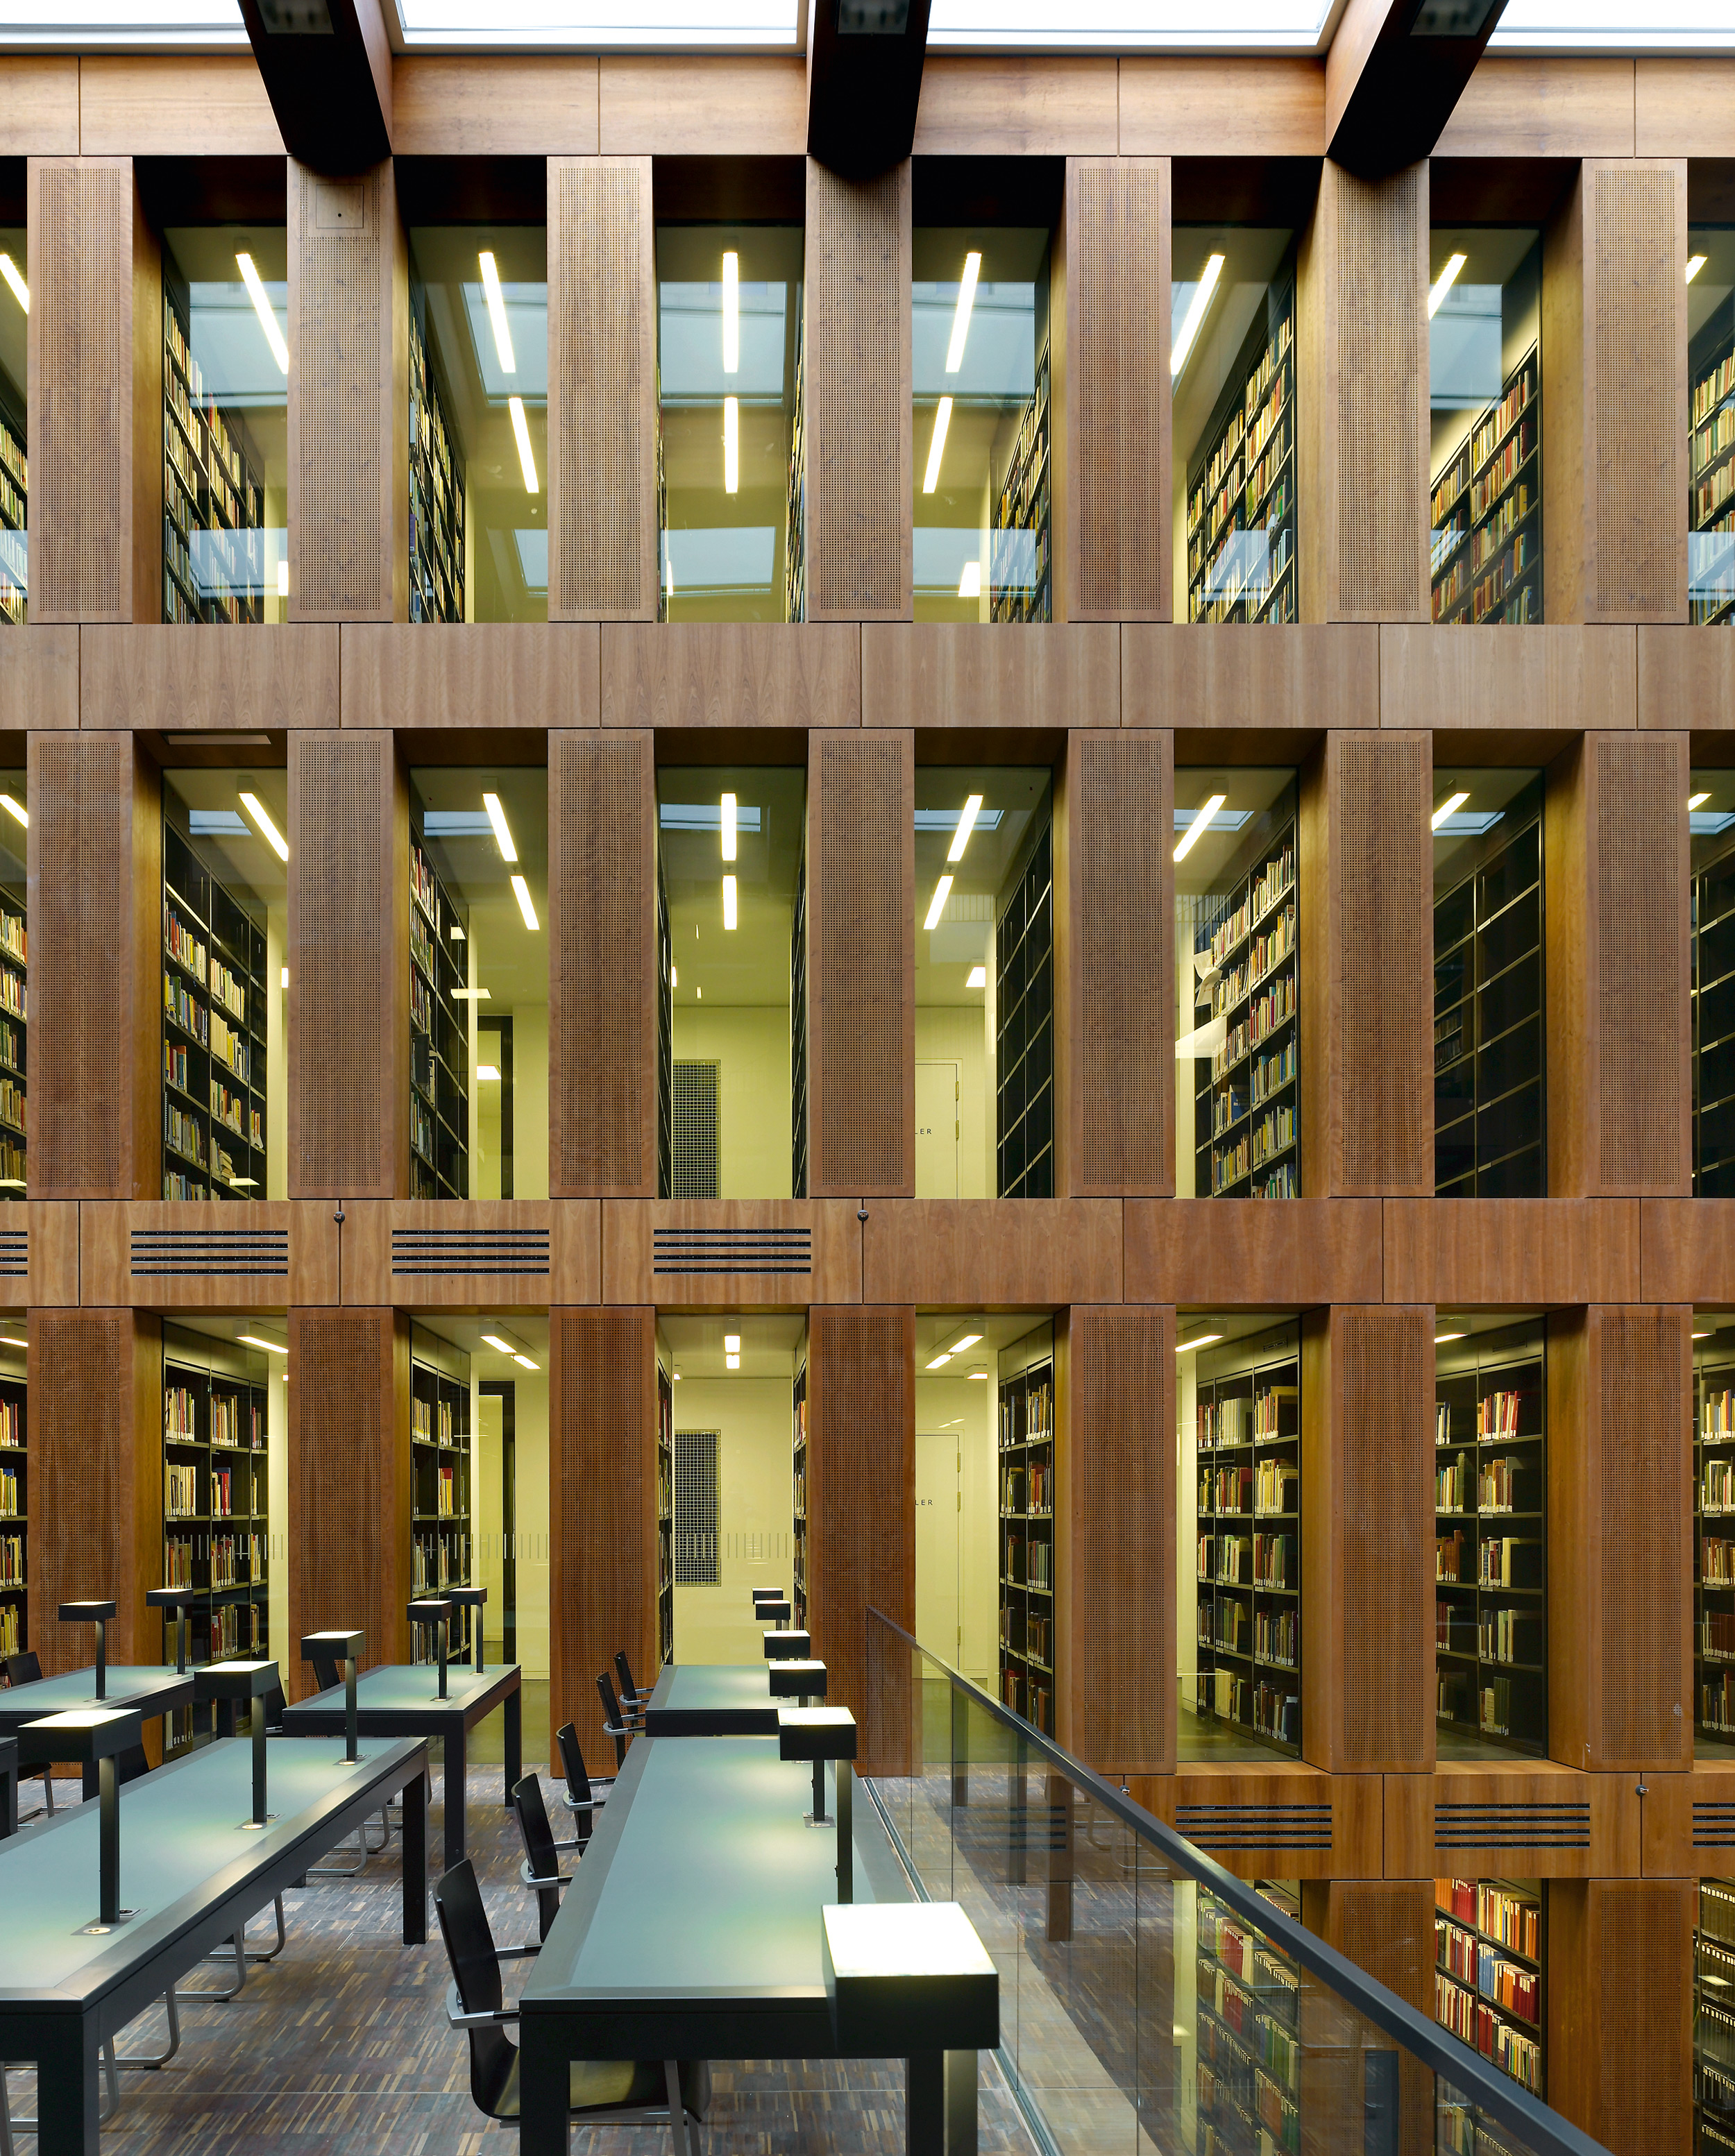  Humboldt University Central Library